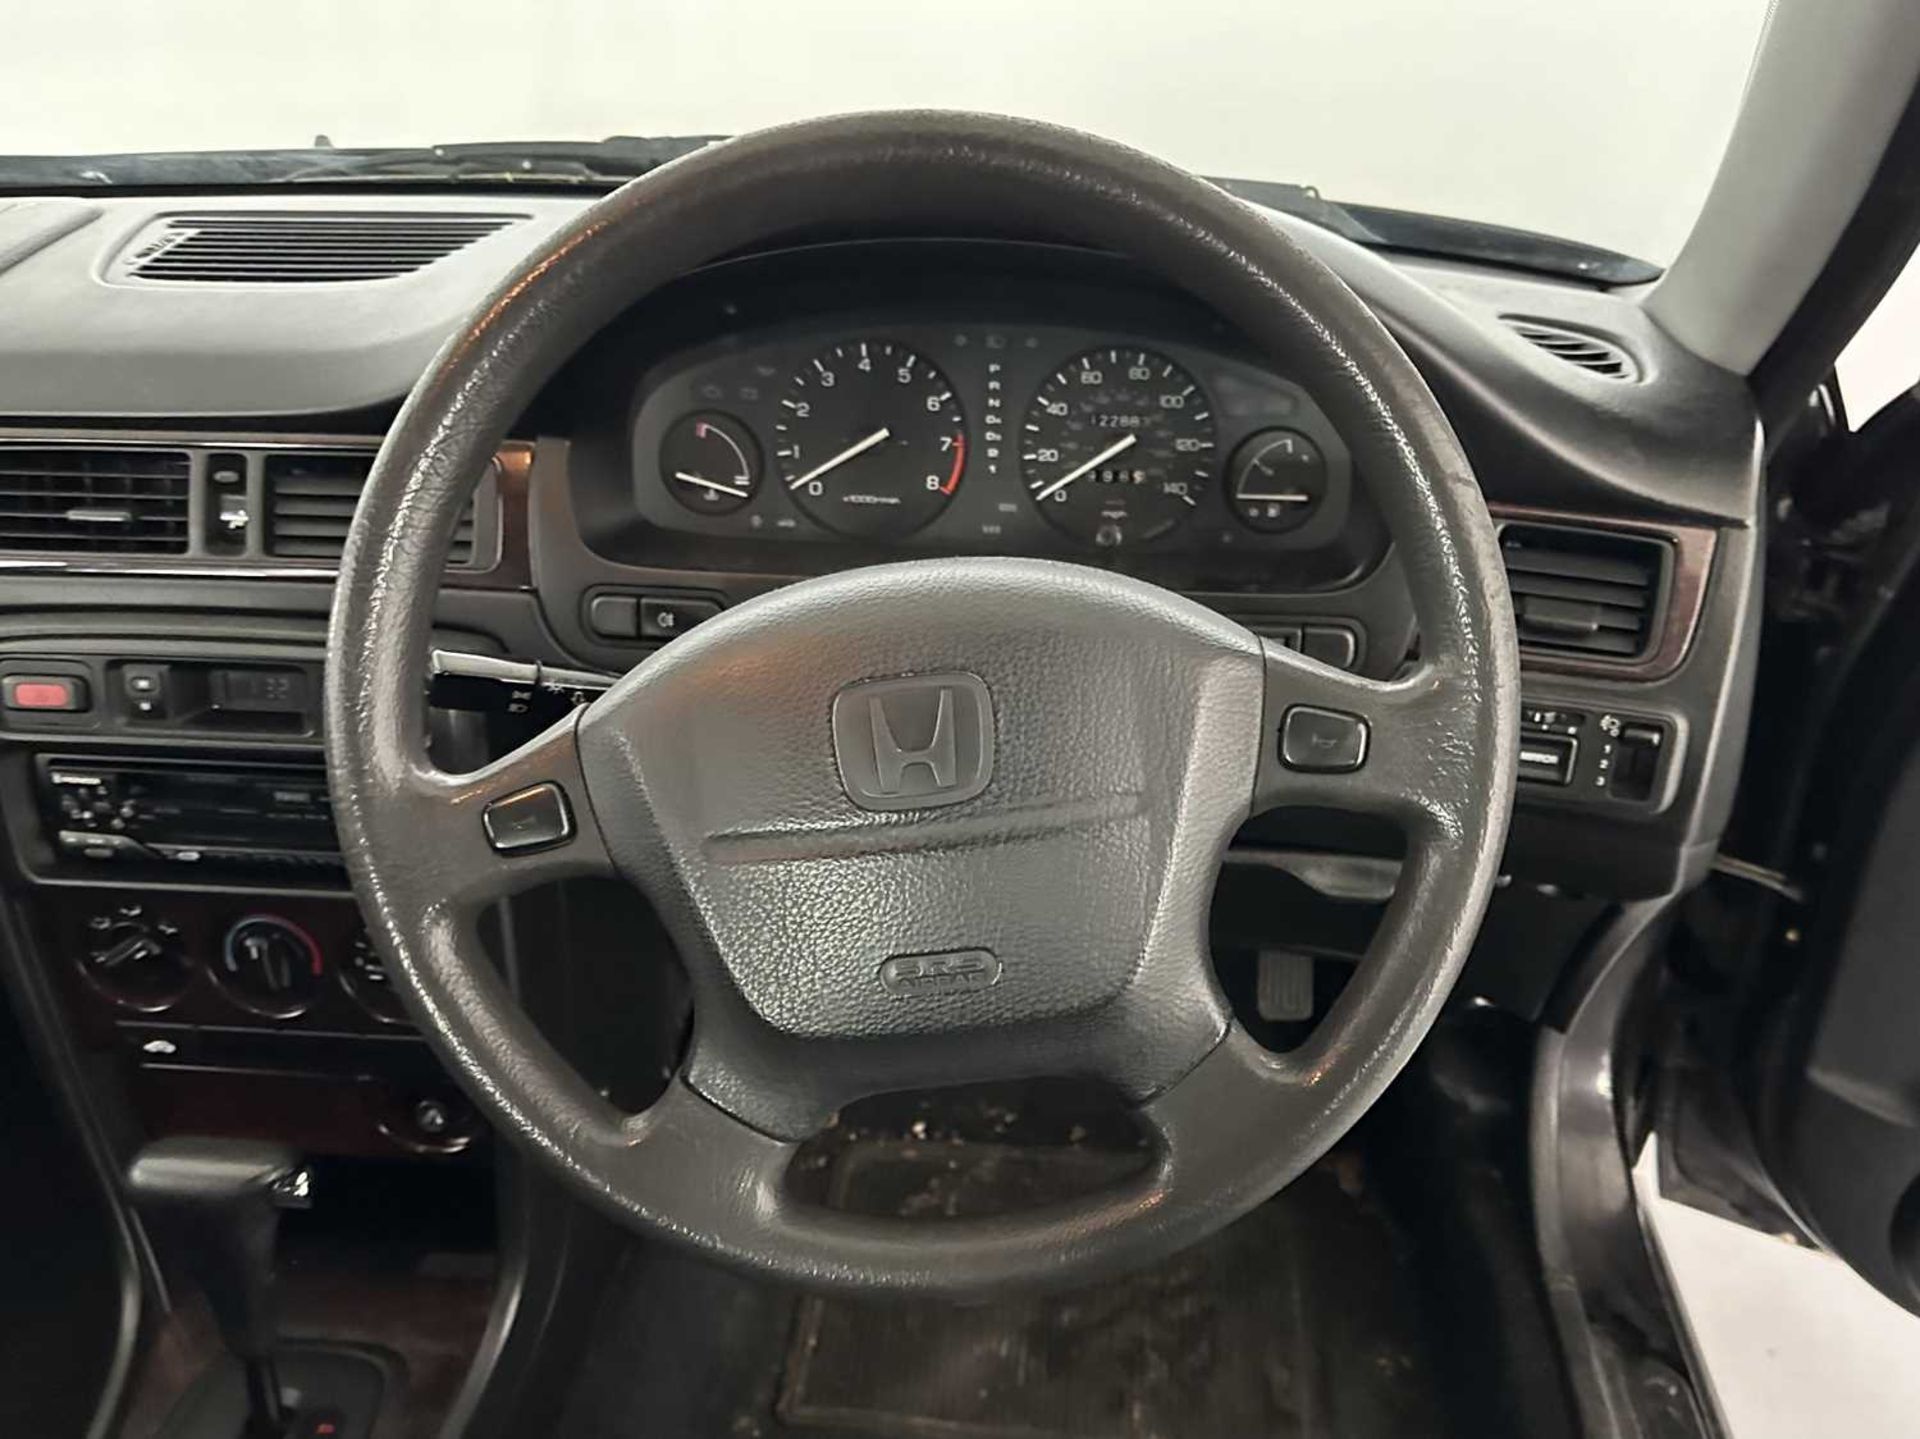 1999 Honda Civic - Image 30 of 34